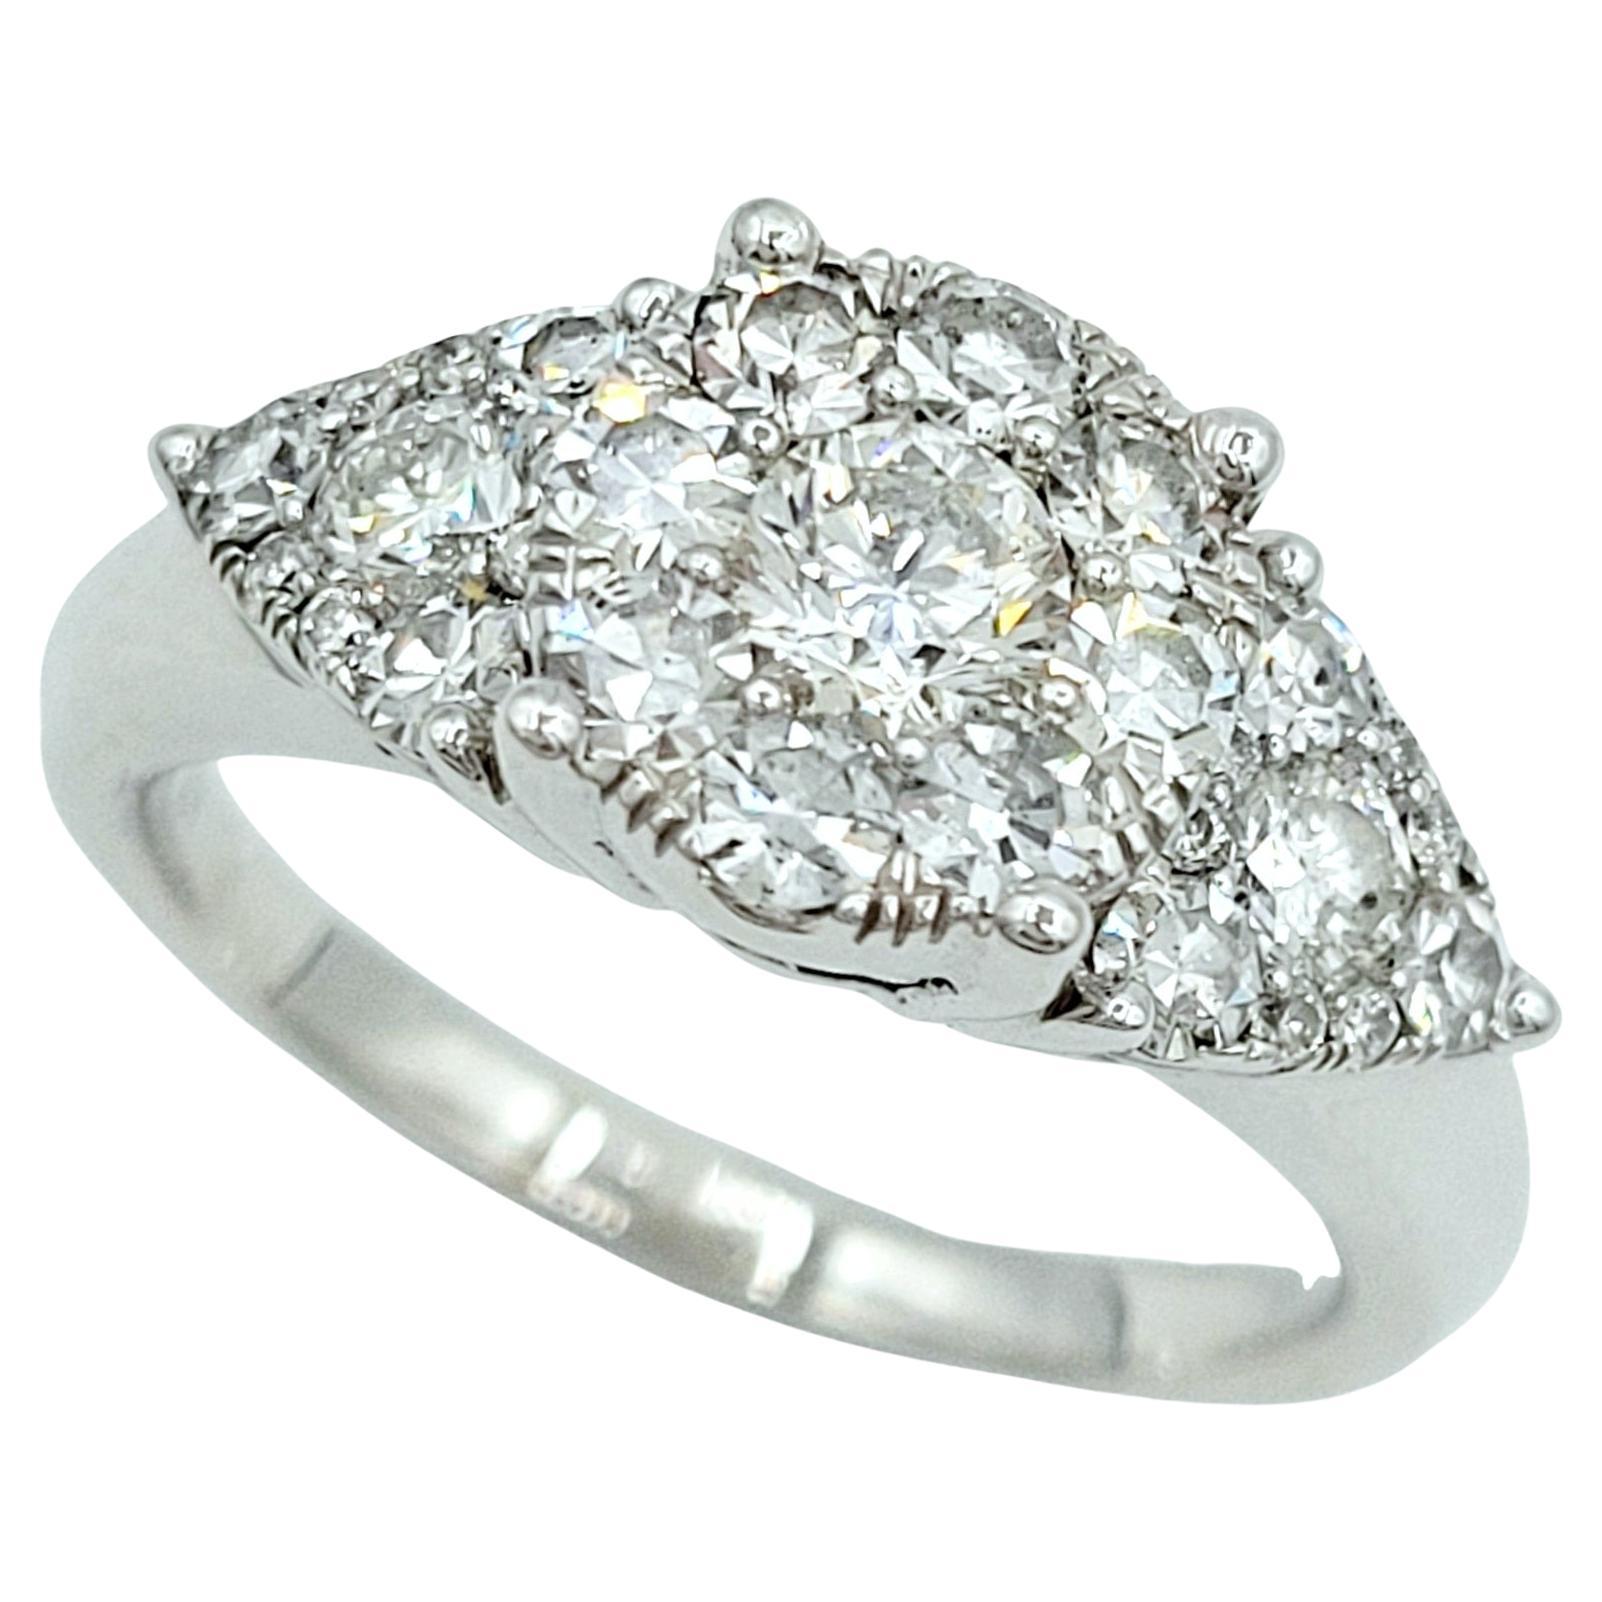 1.25 Carat Total Clustered Diamond Ring Set in Polished 14 Karat White Gold For Sale